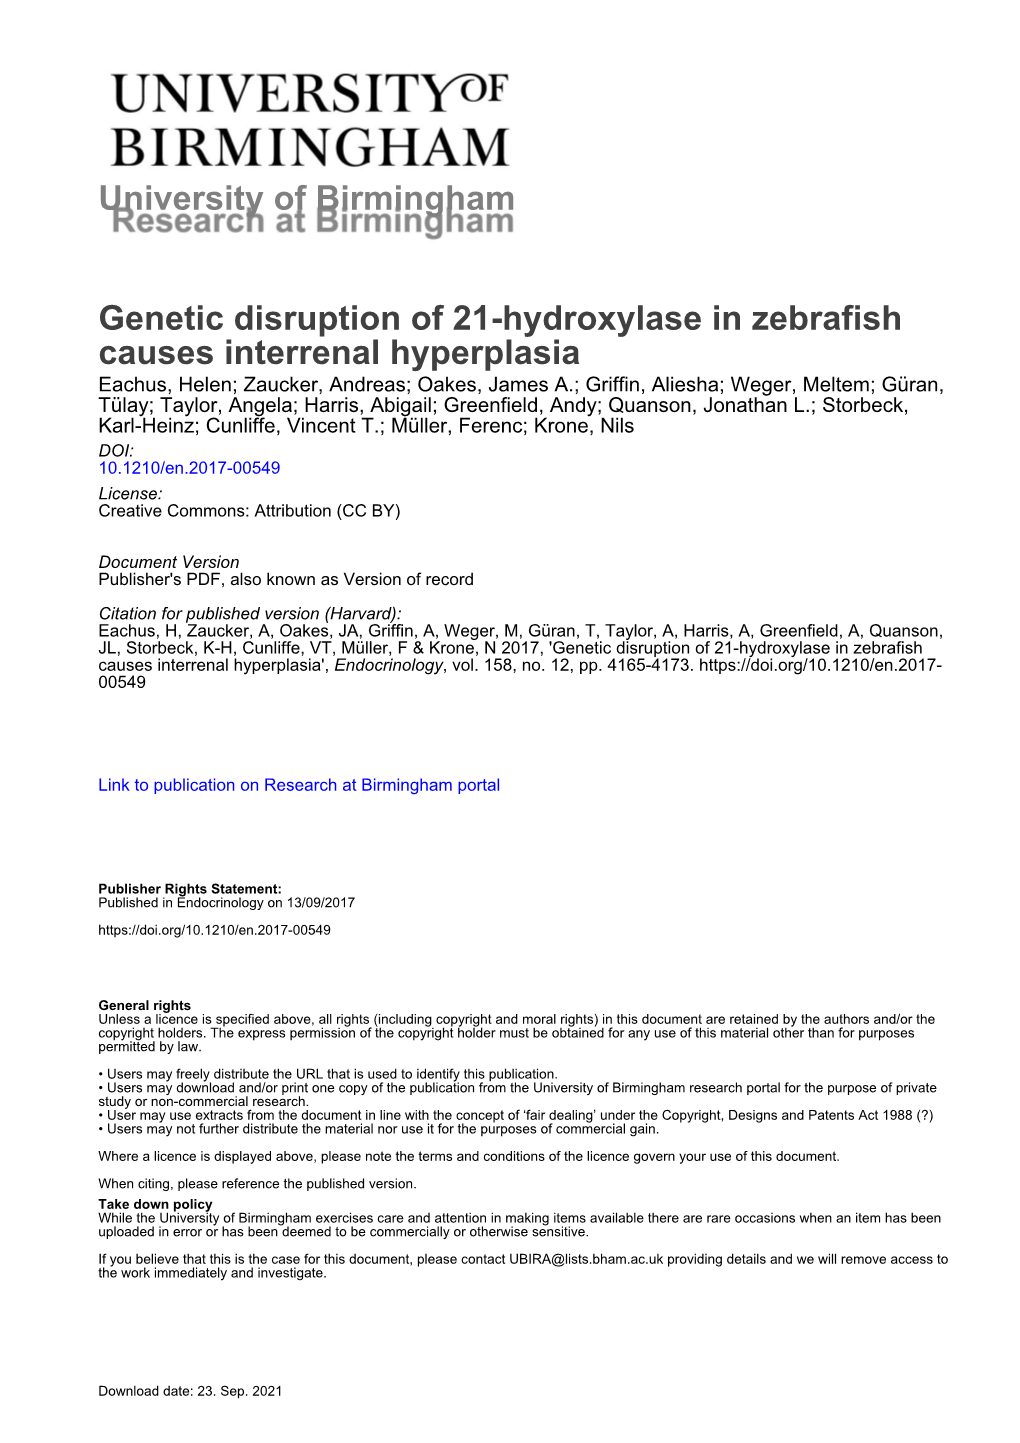 University of Birmingham Genetic Disruption of 21-Hydroxylase in Zebrafish Causes Interrenal Hyperplasia